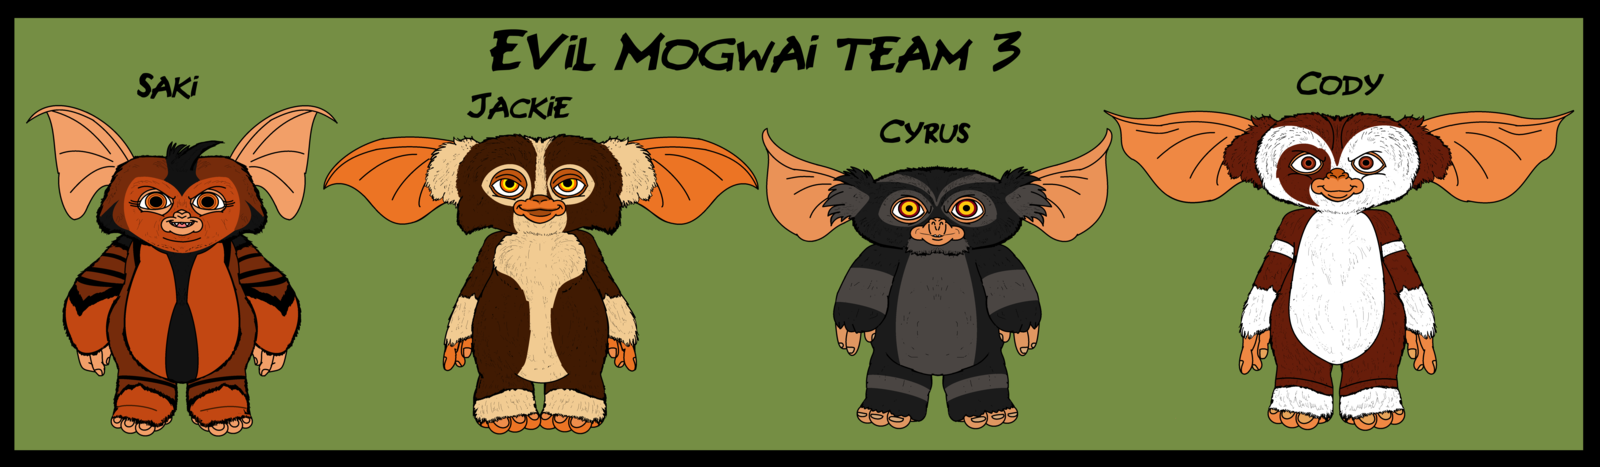 Mogwais - Gremlins Evil Mogwai - HD Wallpaper 